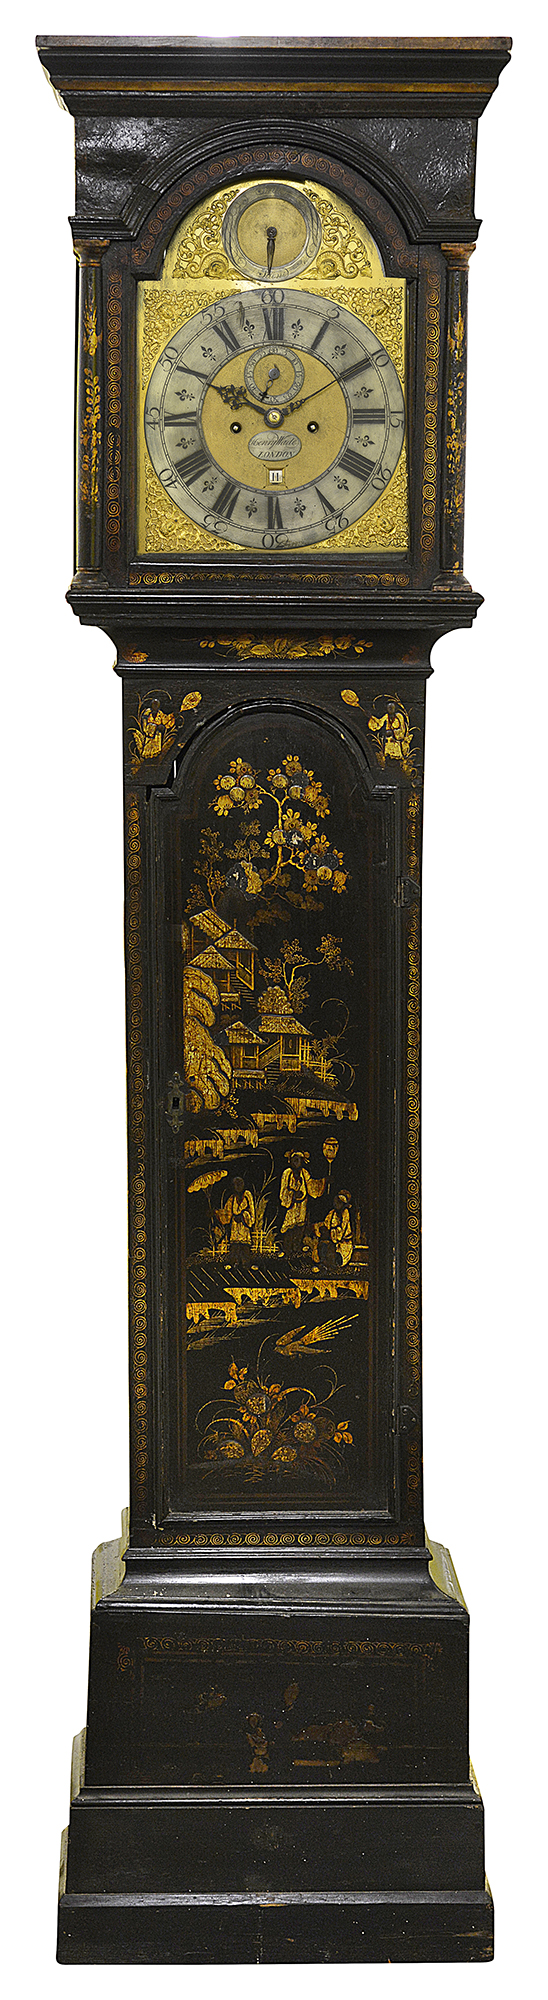 A George III black lacquered longcase clock